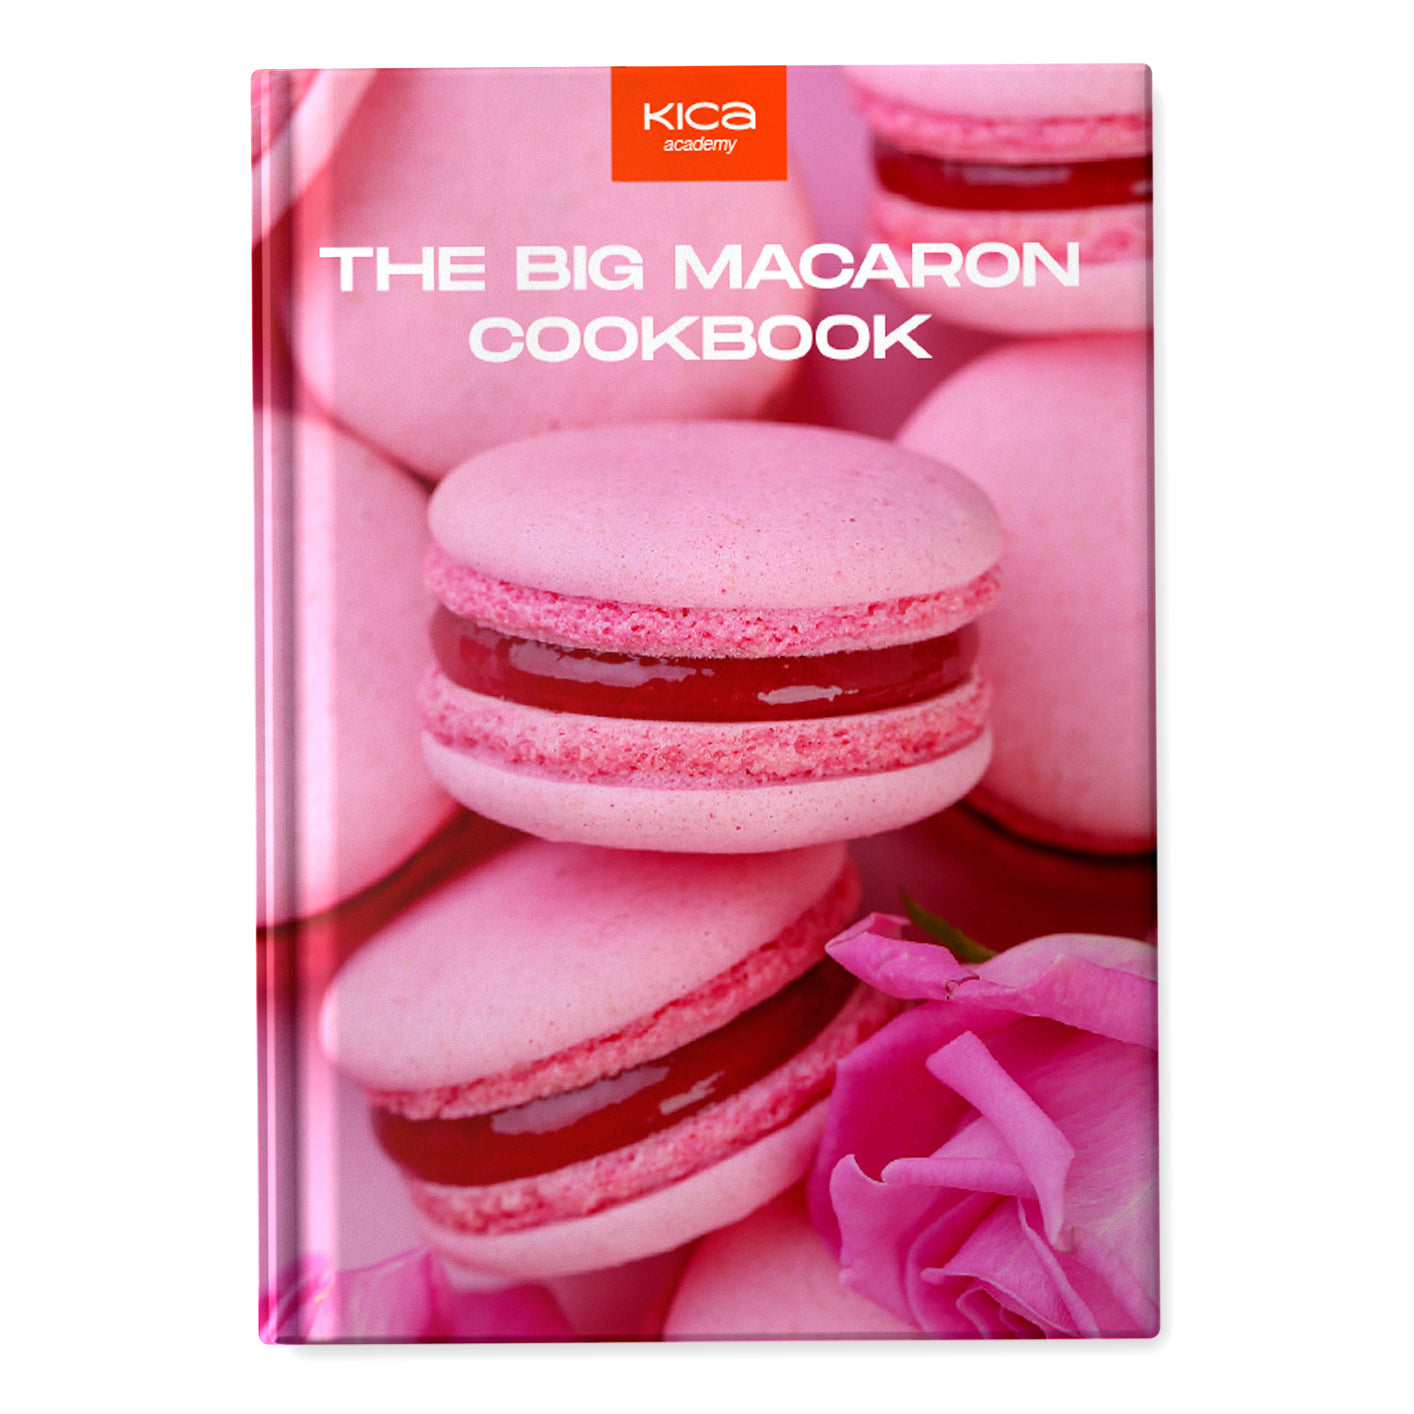 The Big Macaron Cookbook